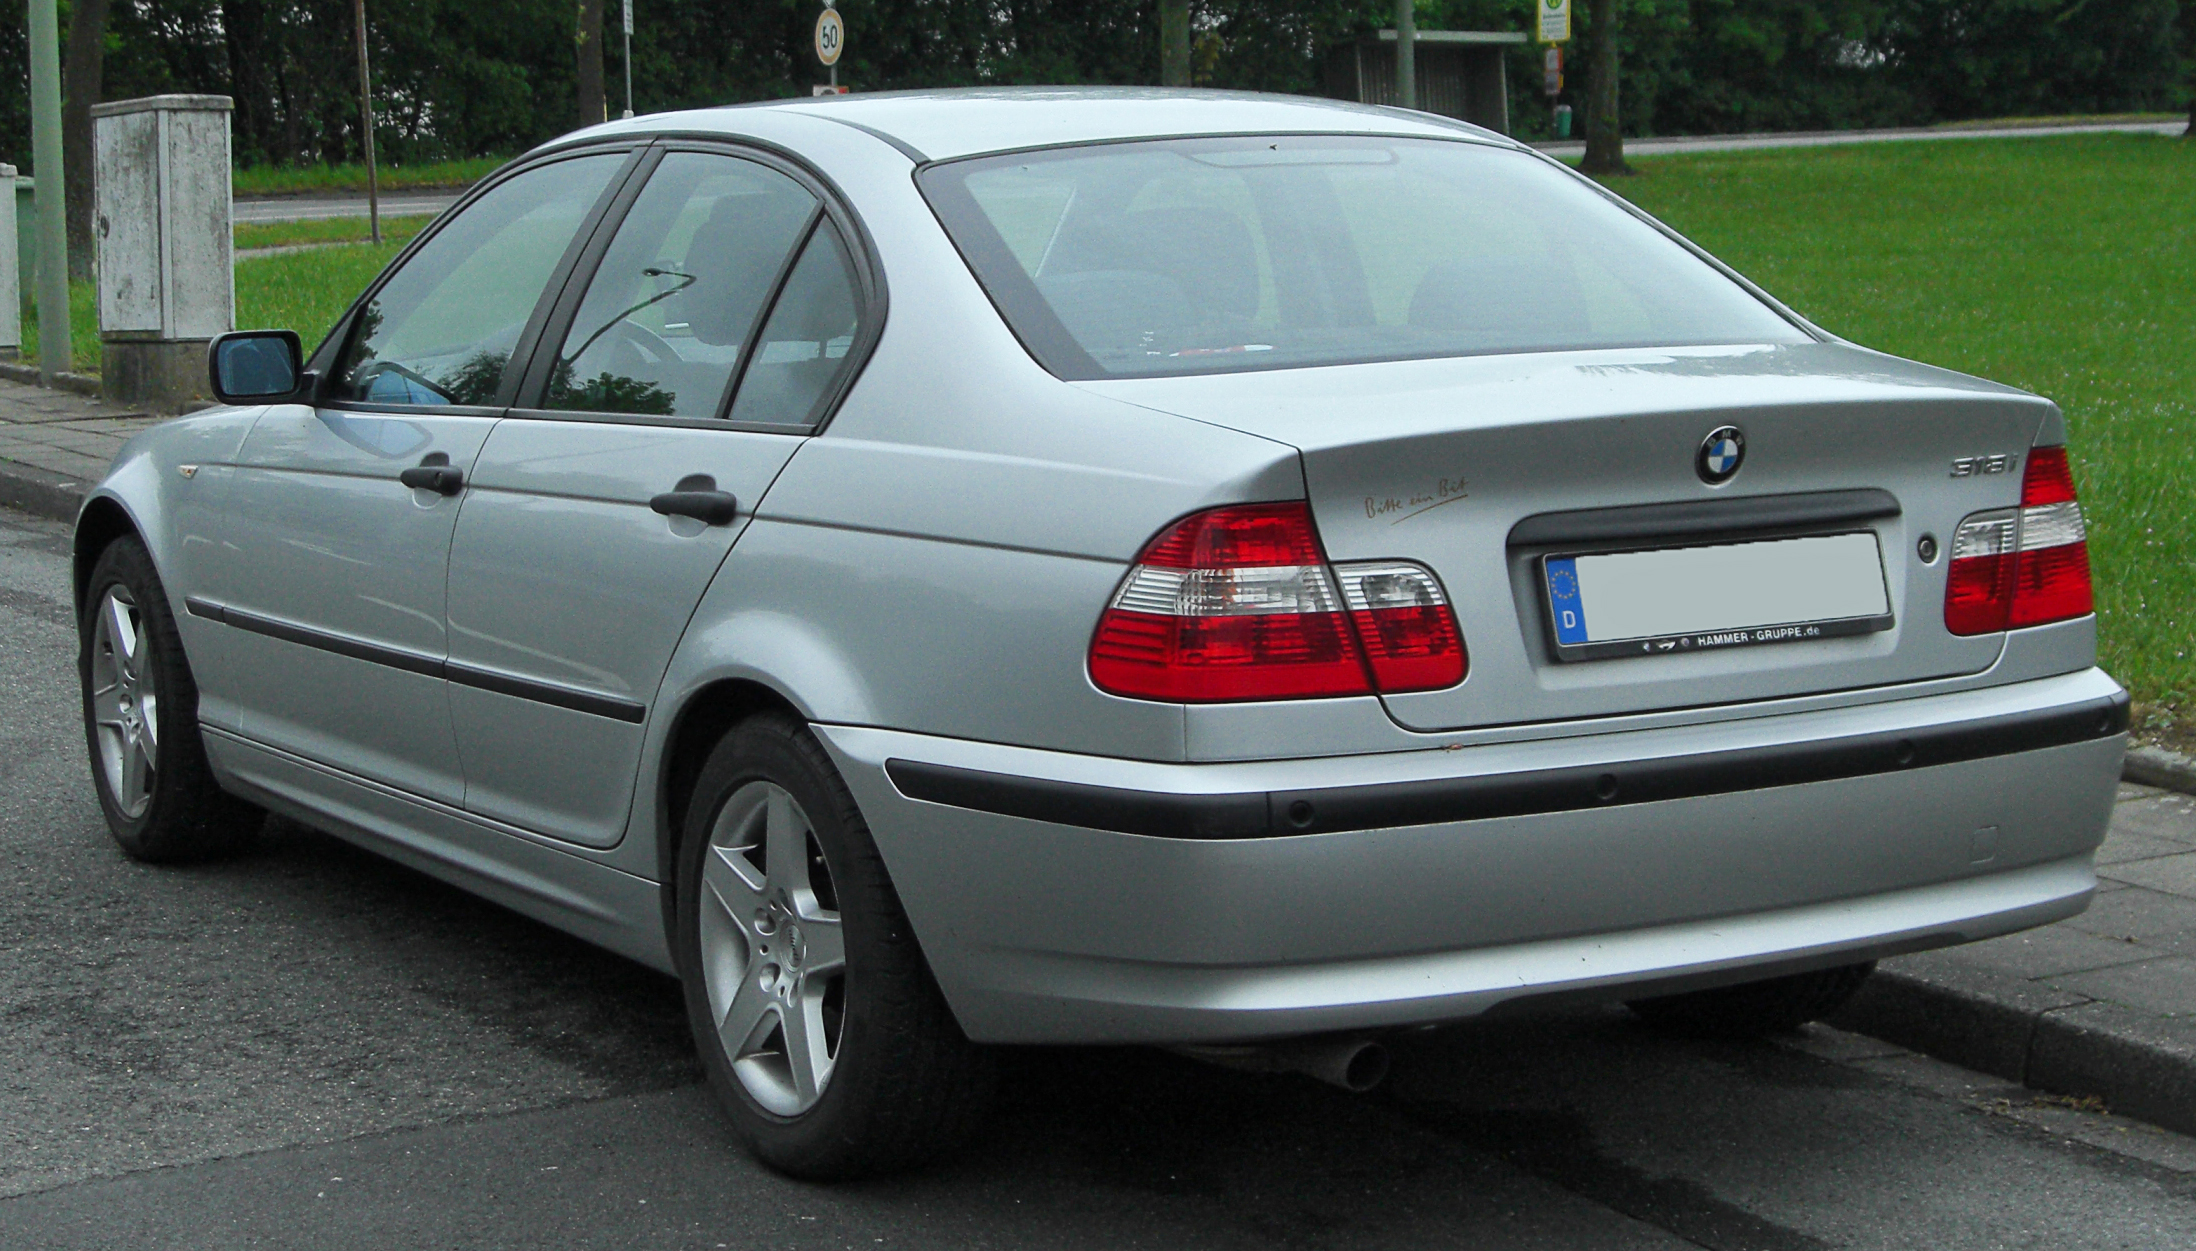 Dossier: BMW 318i (E46) Lifting arrière 20100507.jpg